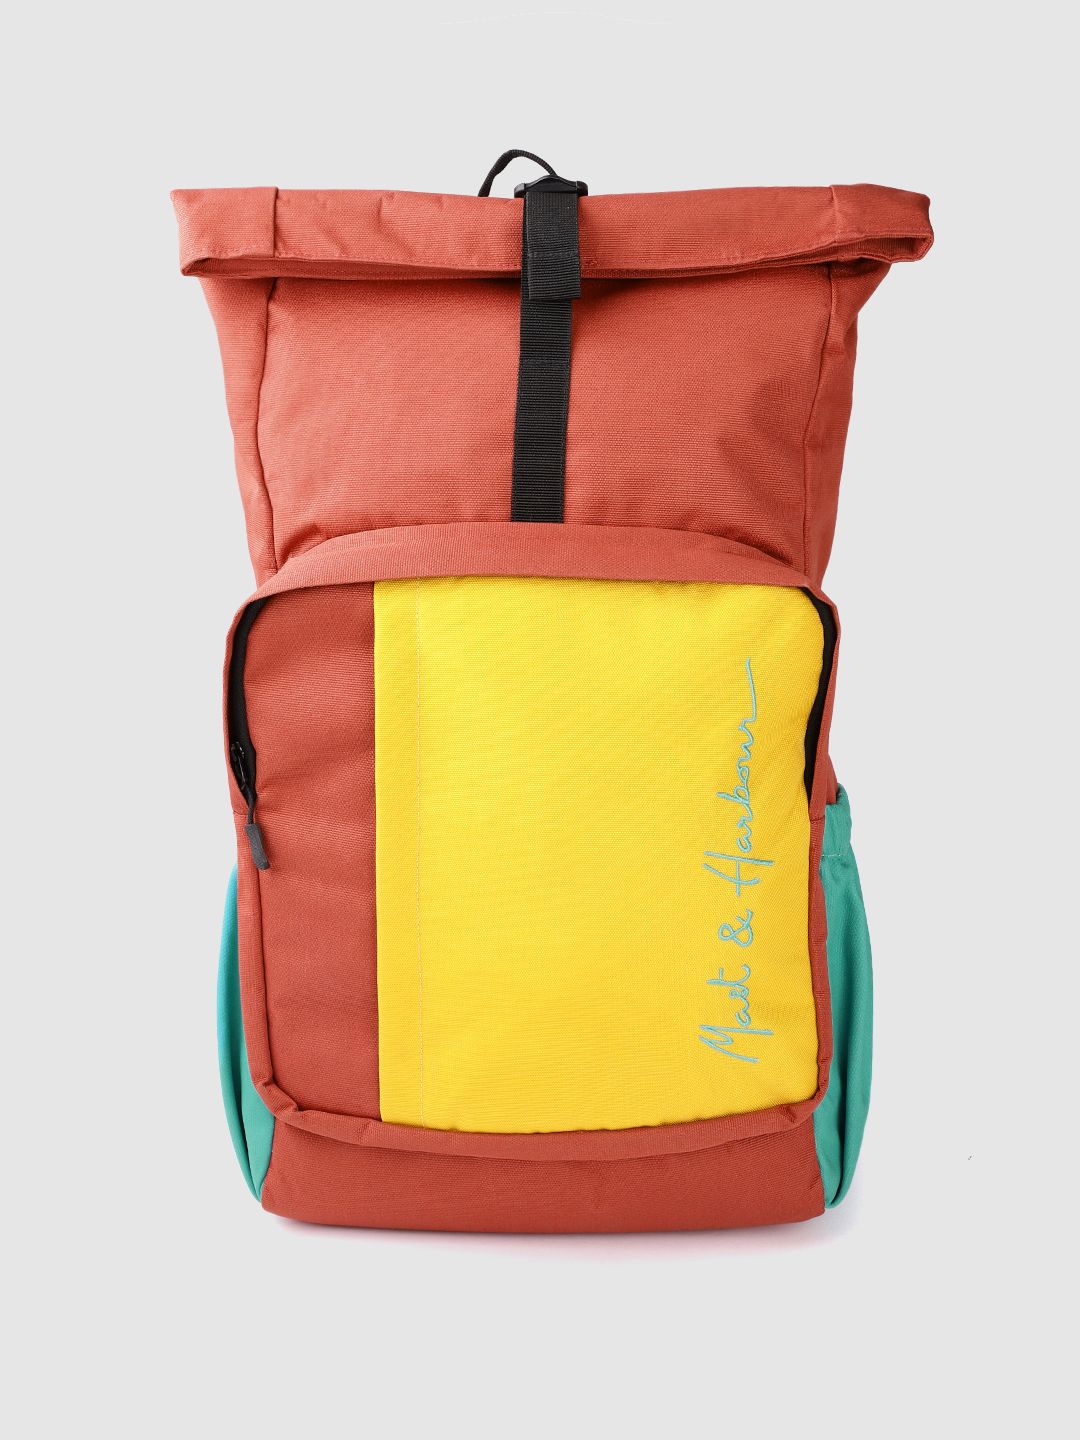 Mast & Harbour Unisex Rust Orange & Yellow Colourblocked Backpack 21.4 L Price in India